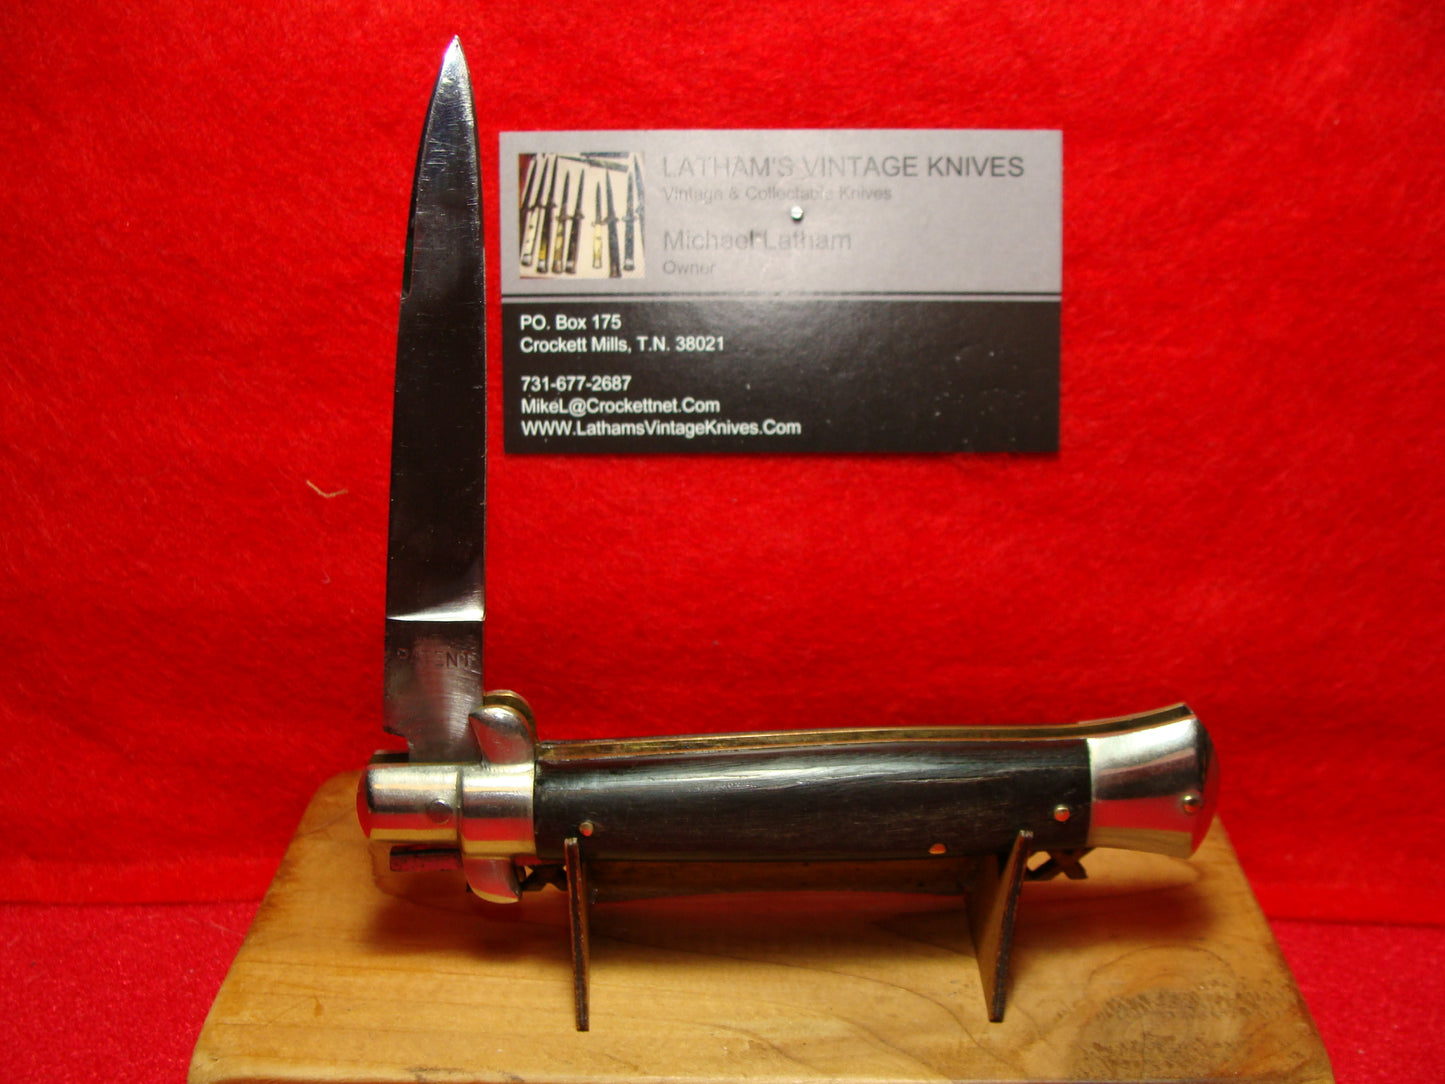 1965 Heileman Old Style/Kingsbury/Blatz Warco Floating Bottle Opener 8¾  Inch Fillet Knife La Crosse Wisconsin for sale at auction on 21st April